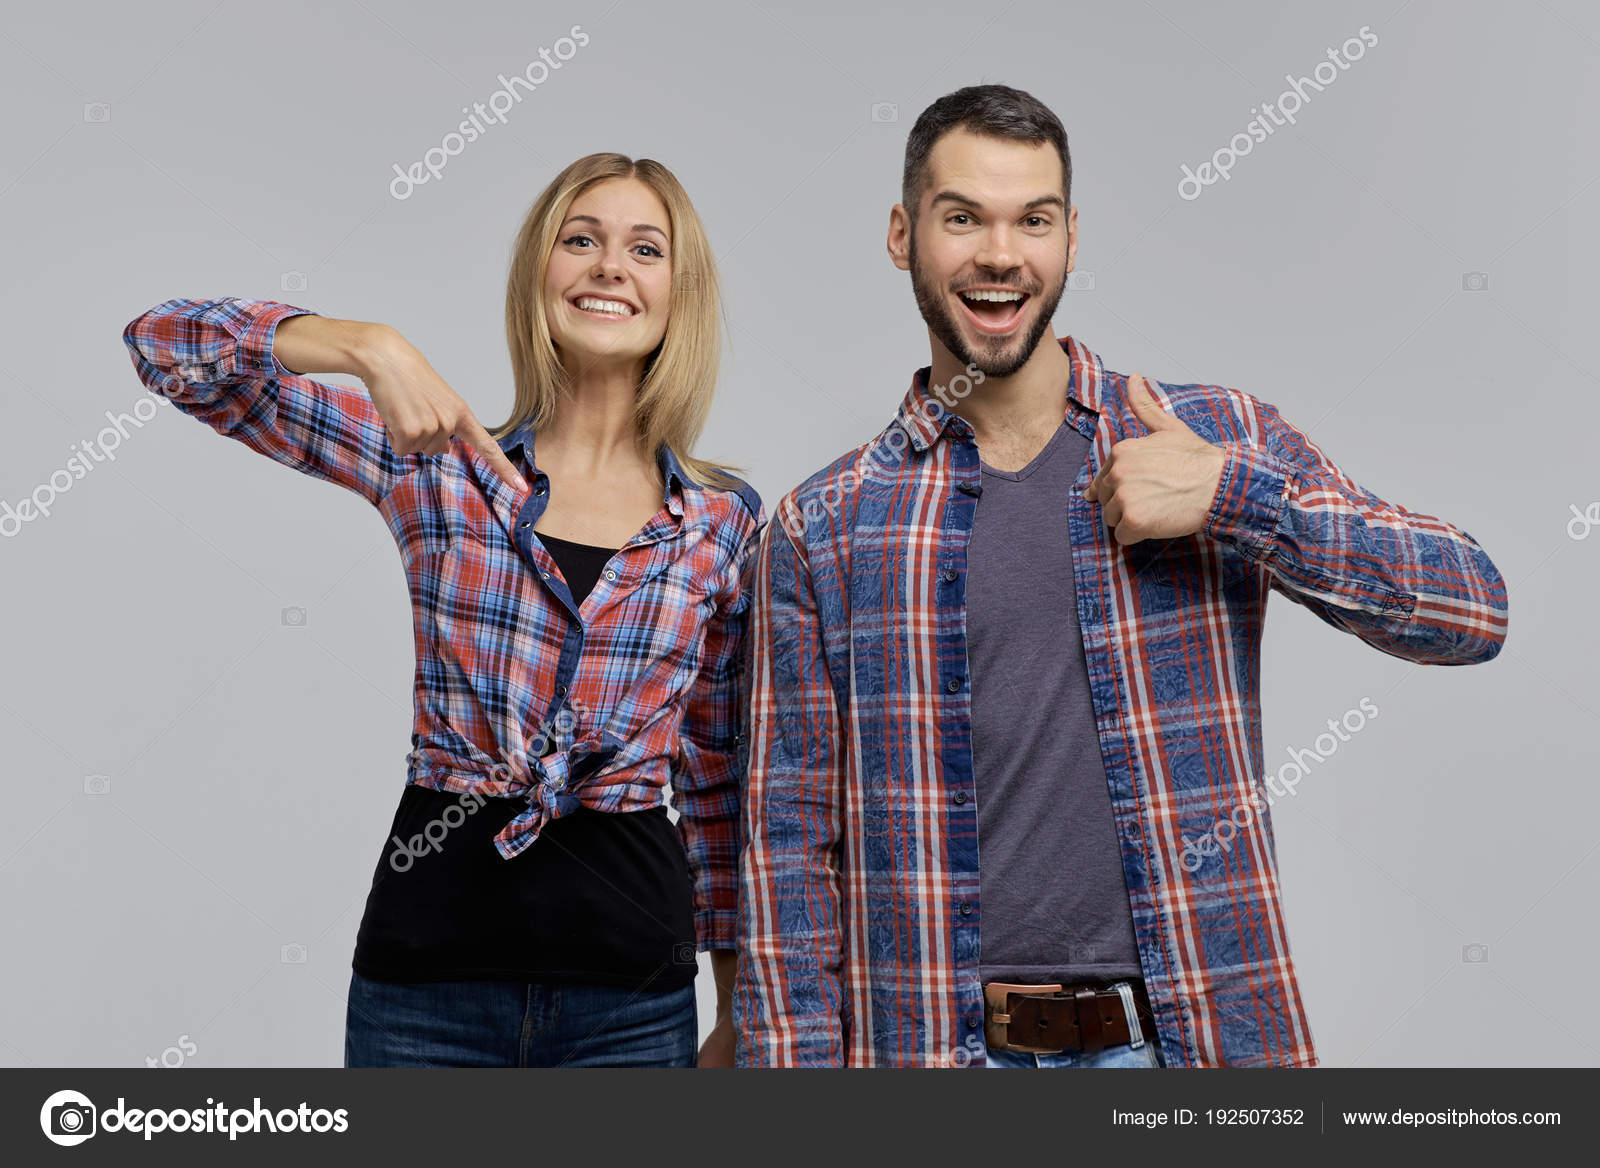 camisa xadrez para casal